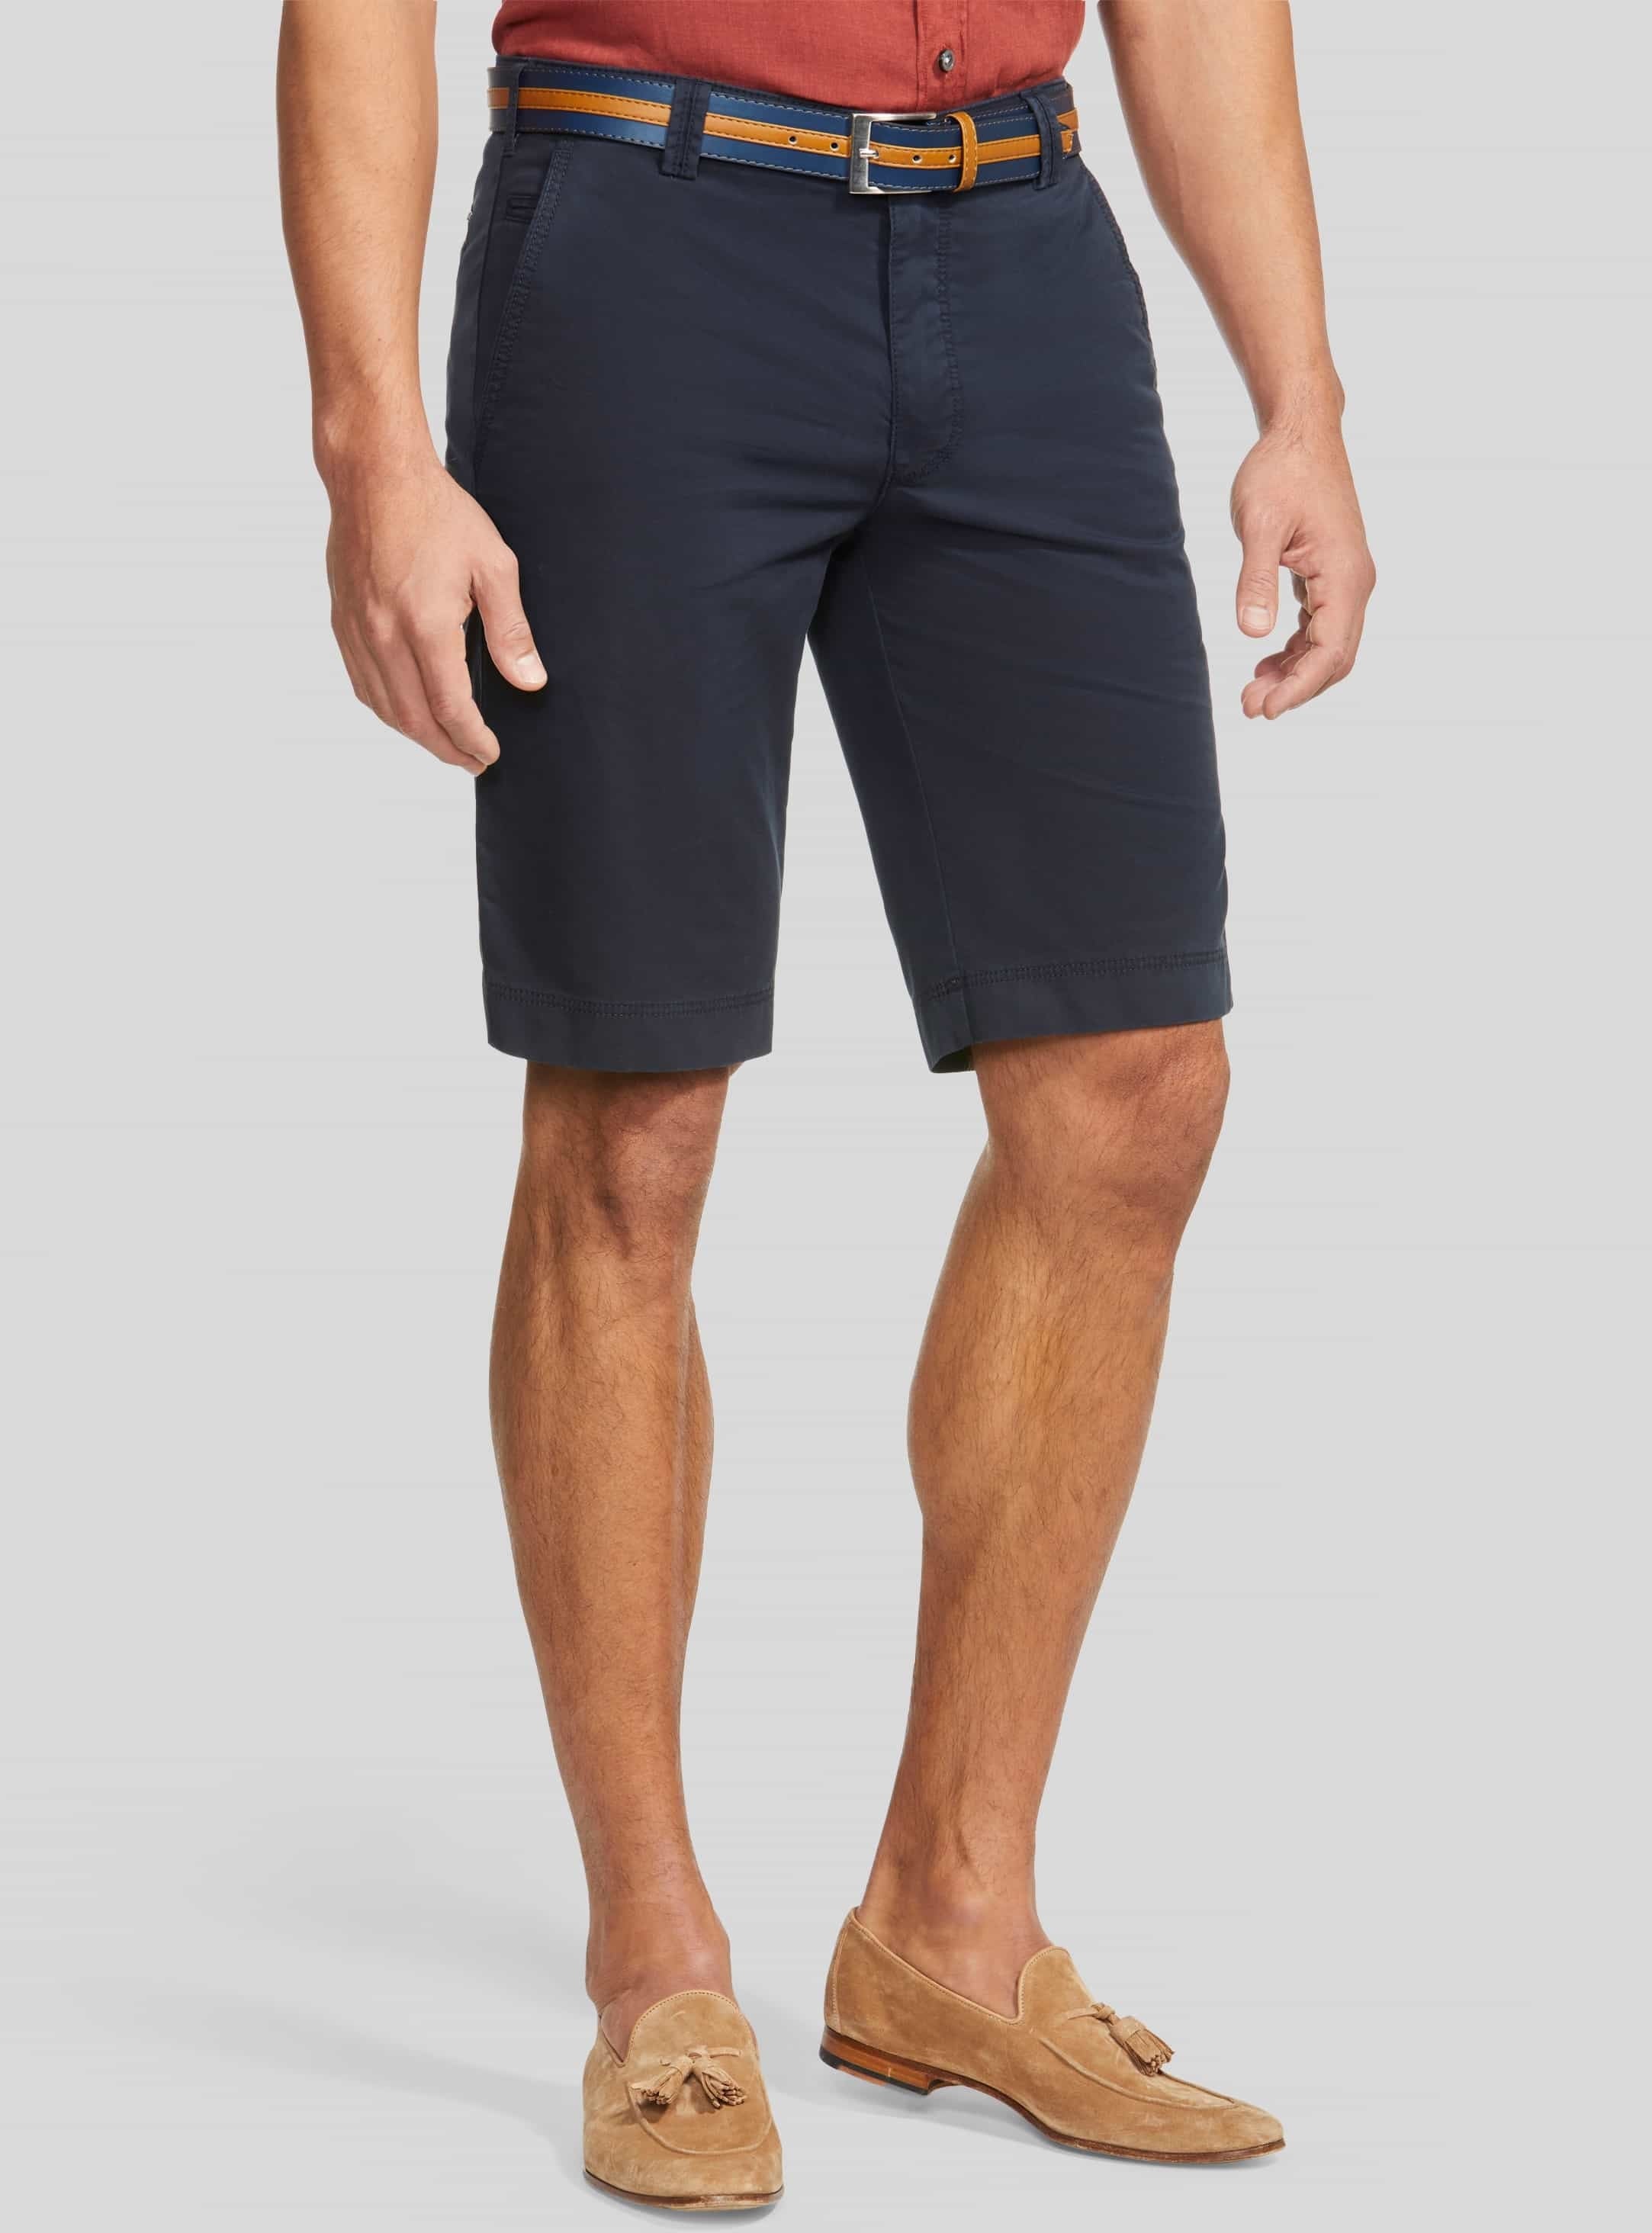 30% OFF - MEYER B-Palma Shorts - Men's Cotton Twill - Navy - Size: 38